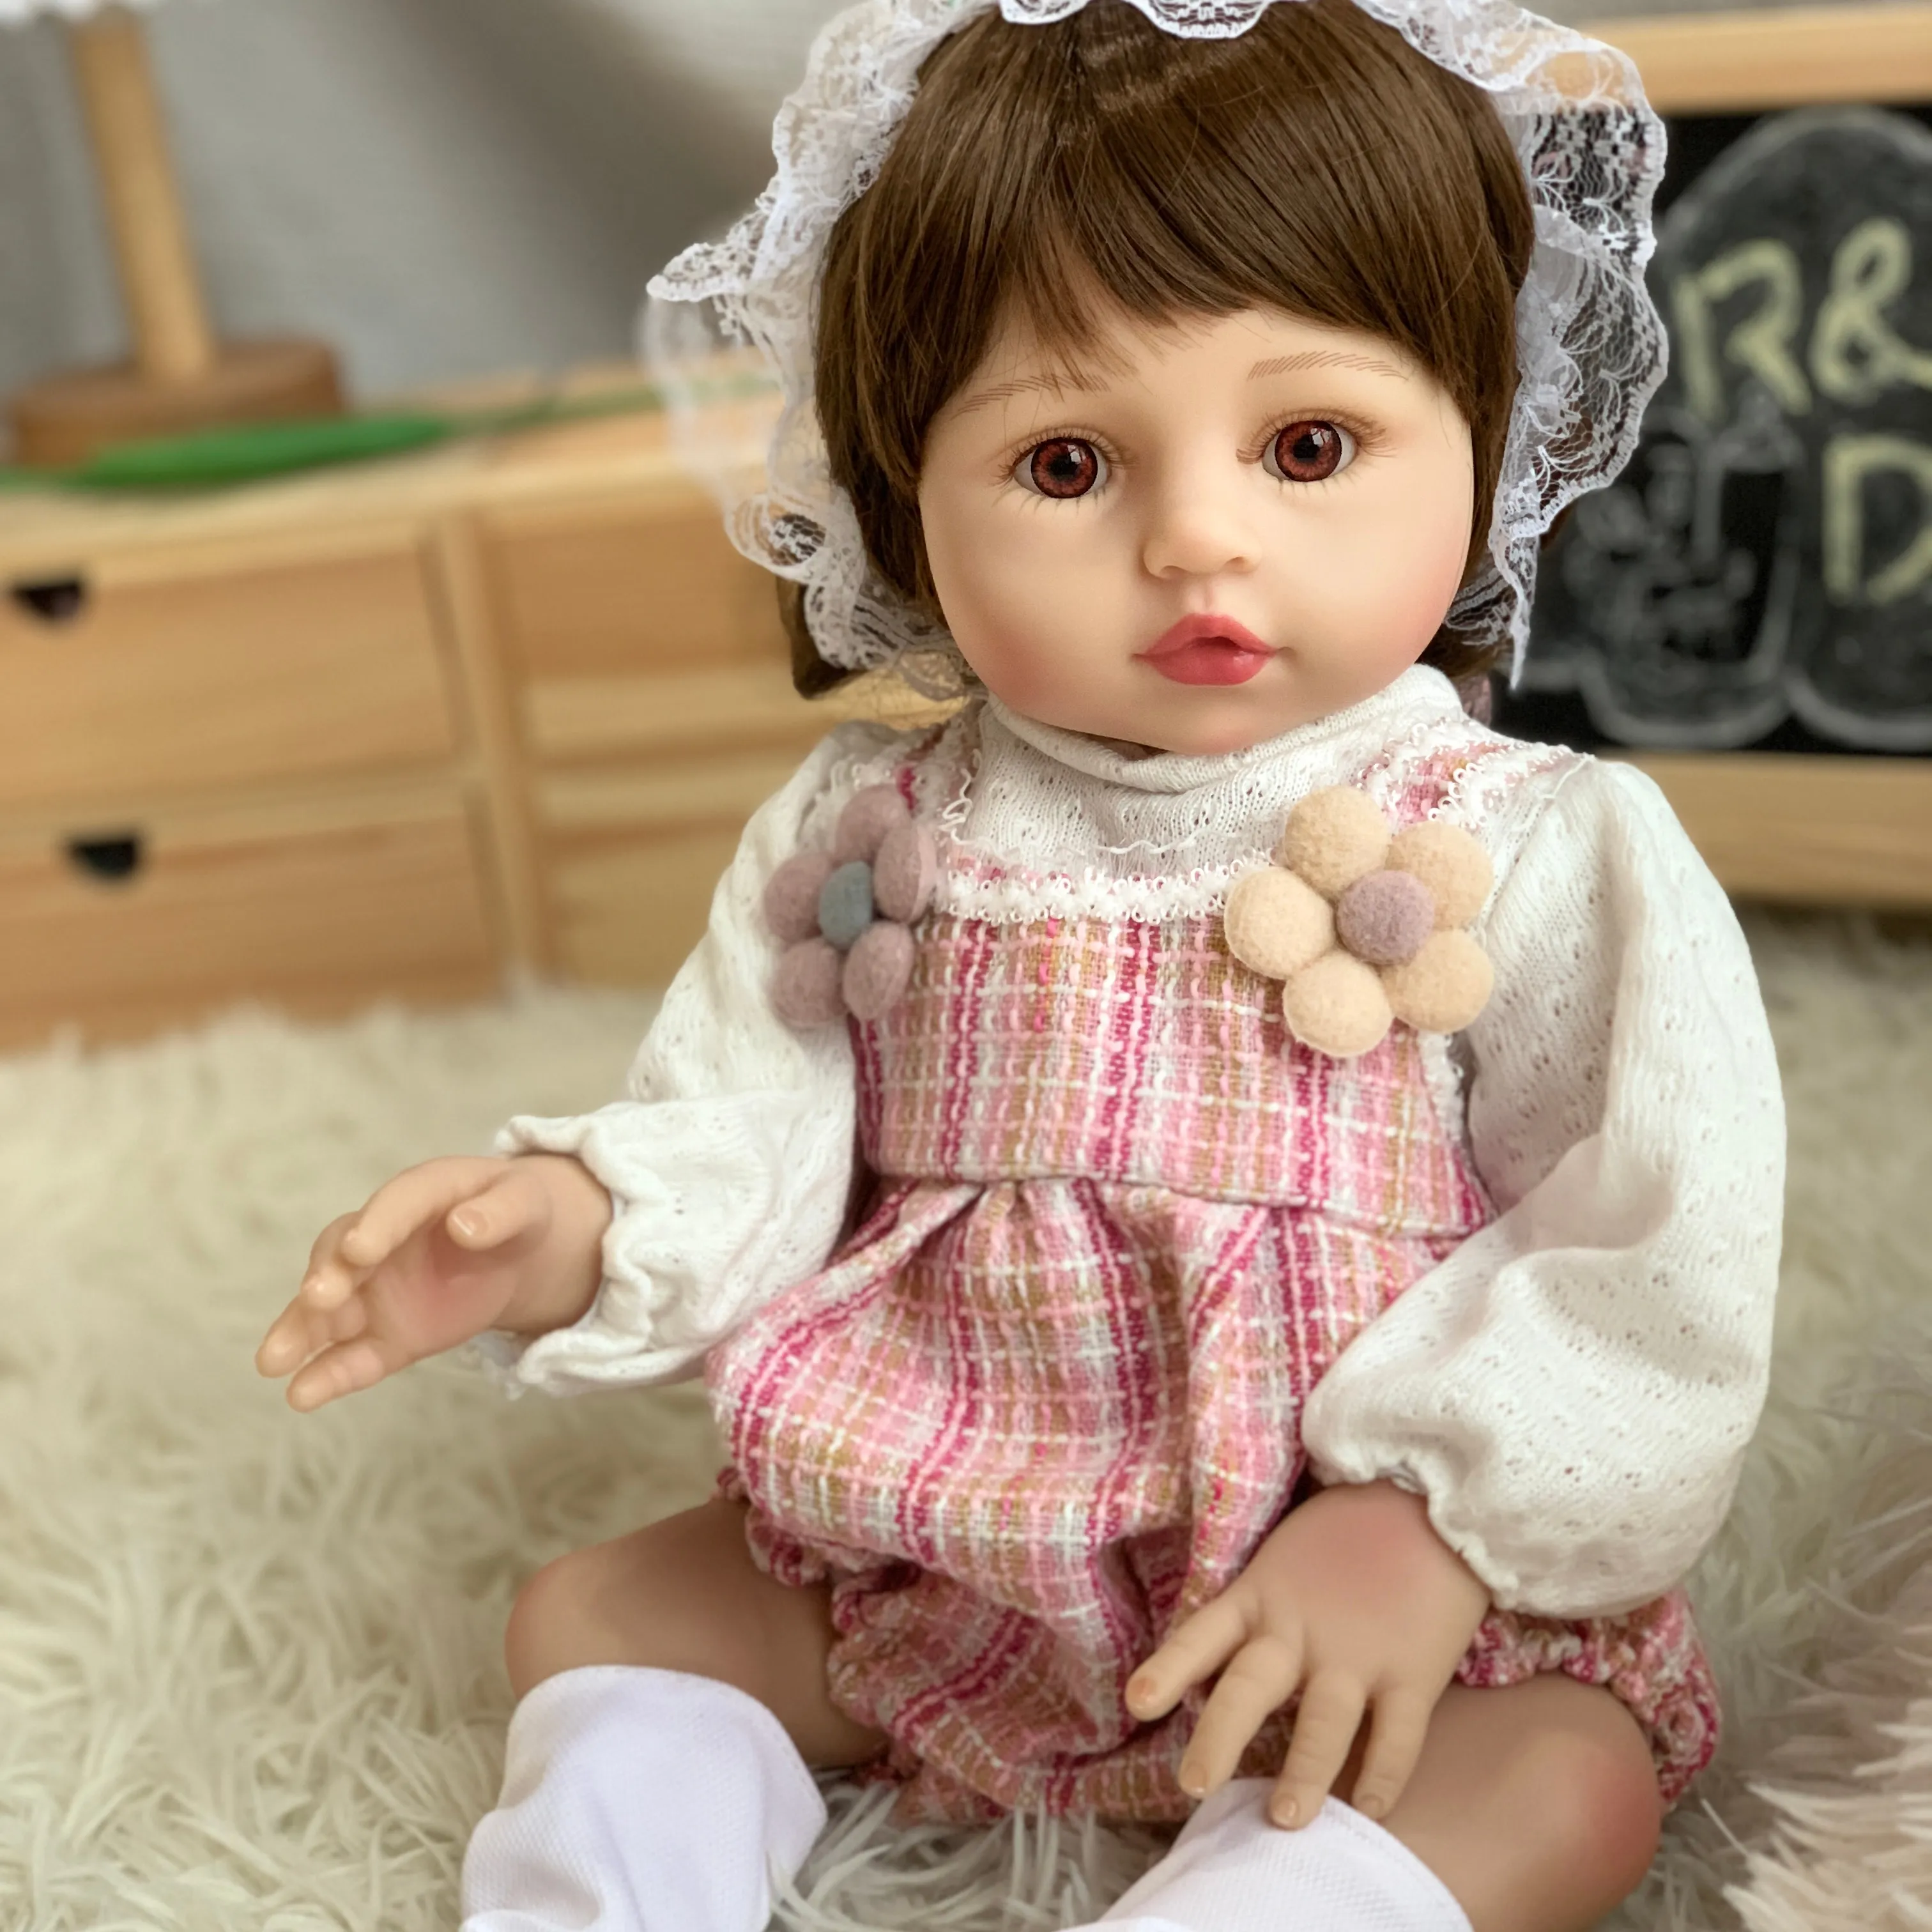 R&B atacado modelo de brinquedo Loli para meninas, roupas e conjunto realista para crianças, casa de bonecas, bonecos reborn de silicone